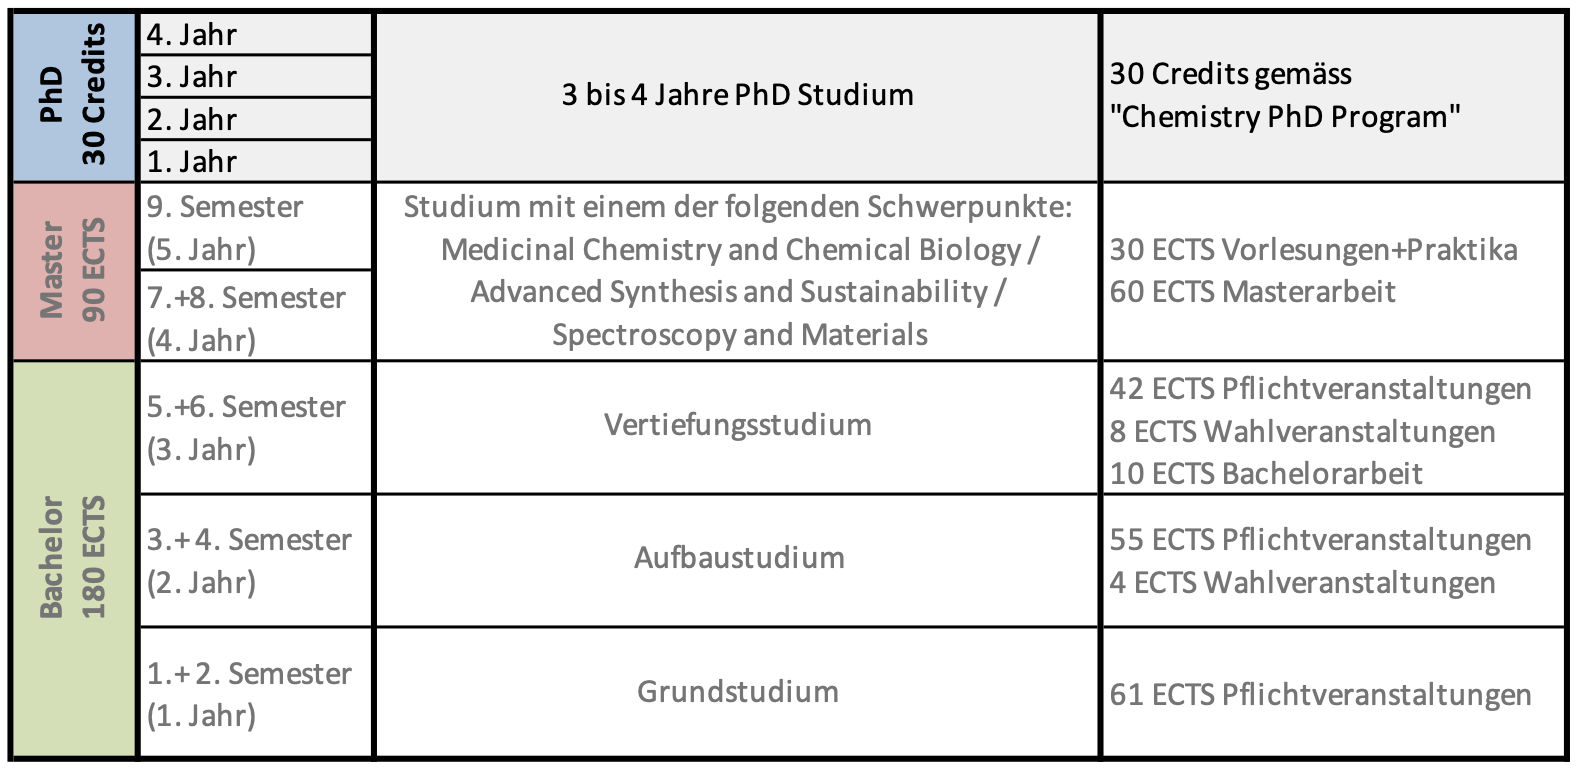 chemistry phd switzerland